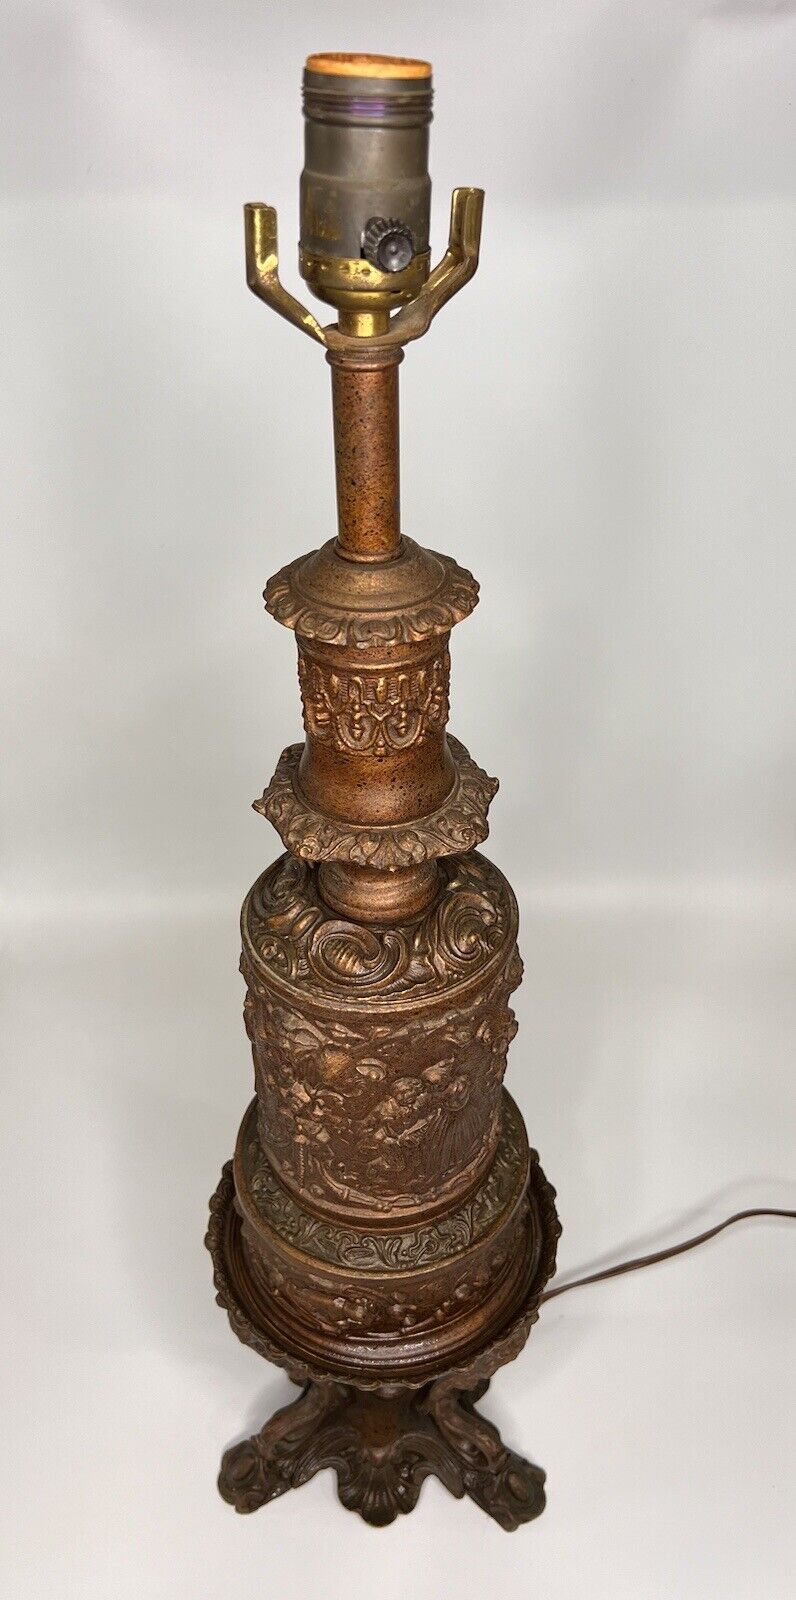 Vintage Ornate Solid Brass Table Lamp